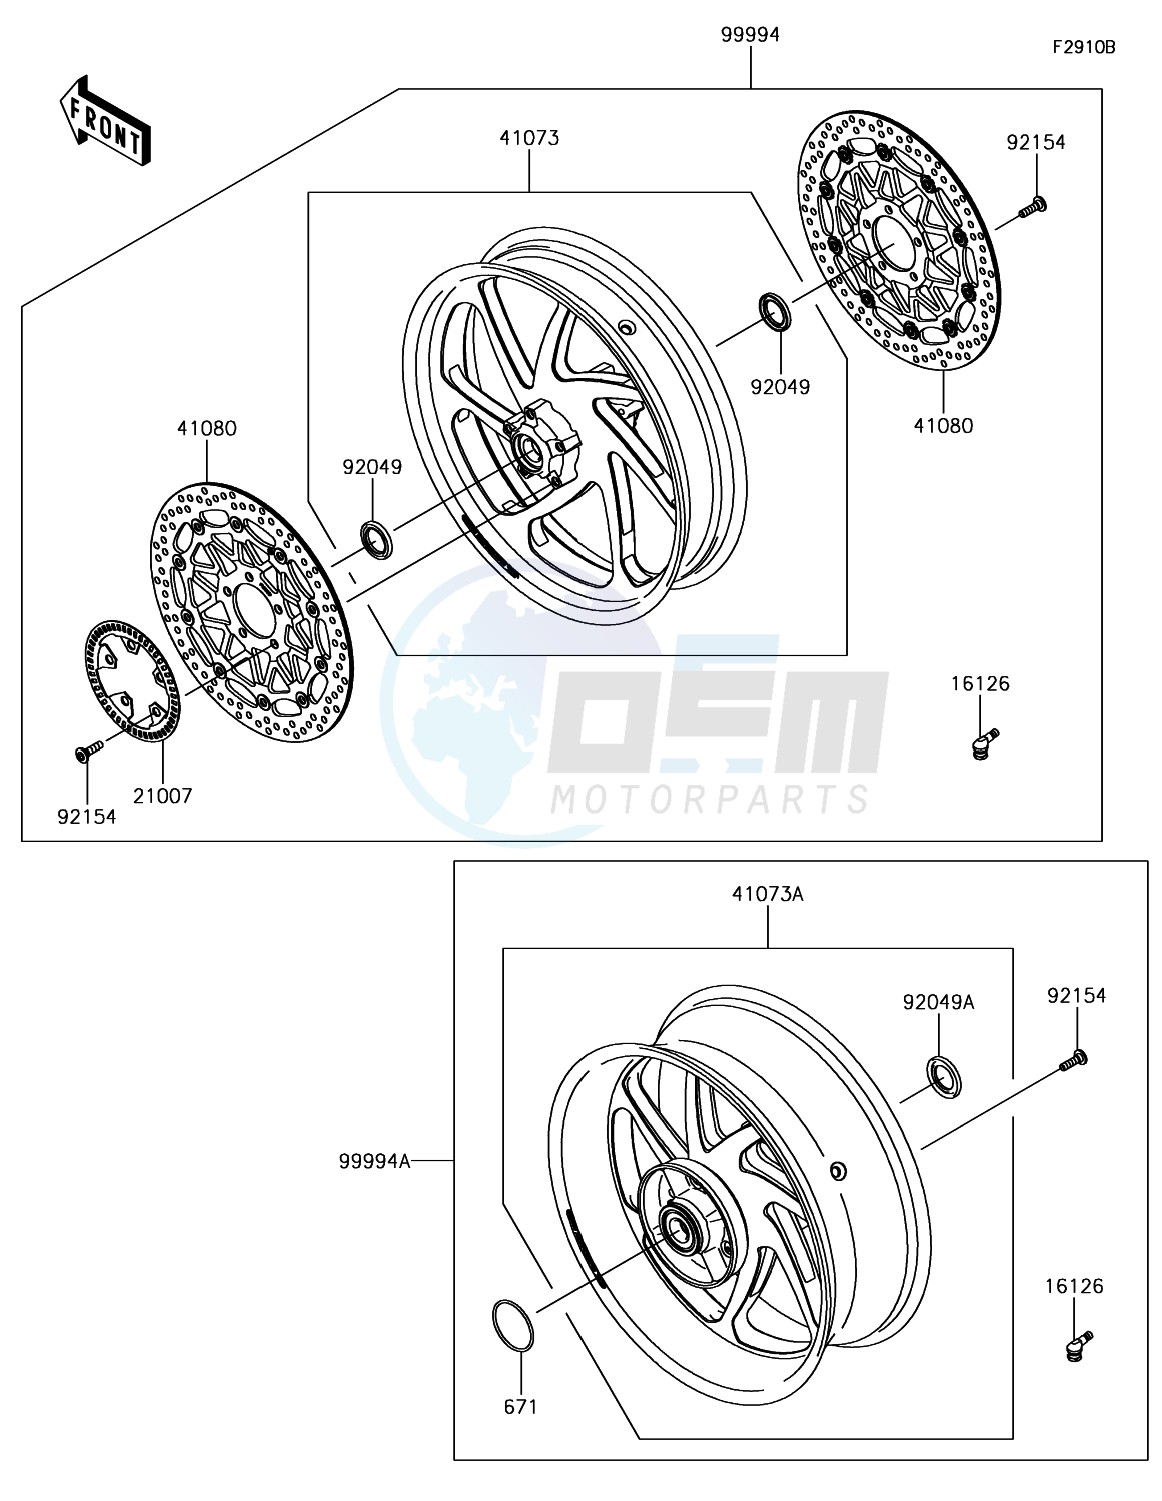 Accessory(Marchesini Wheel) blueprint